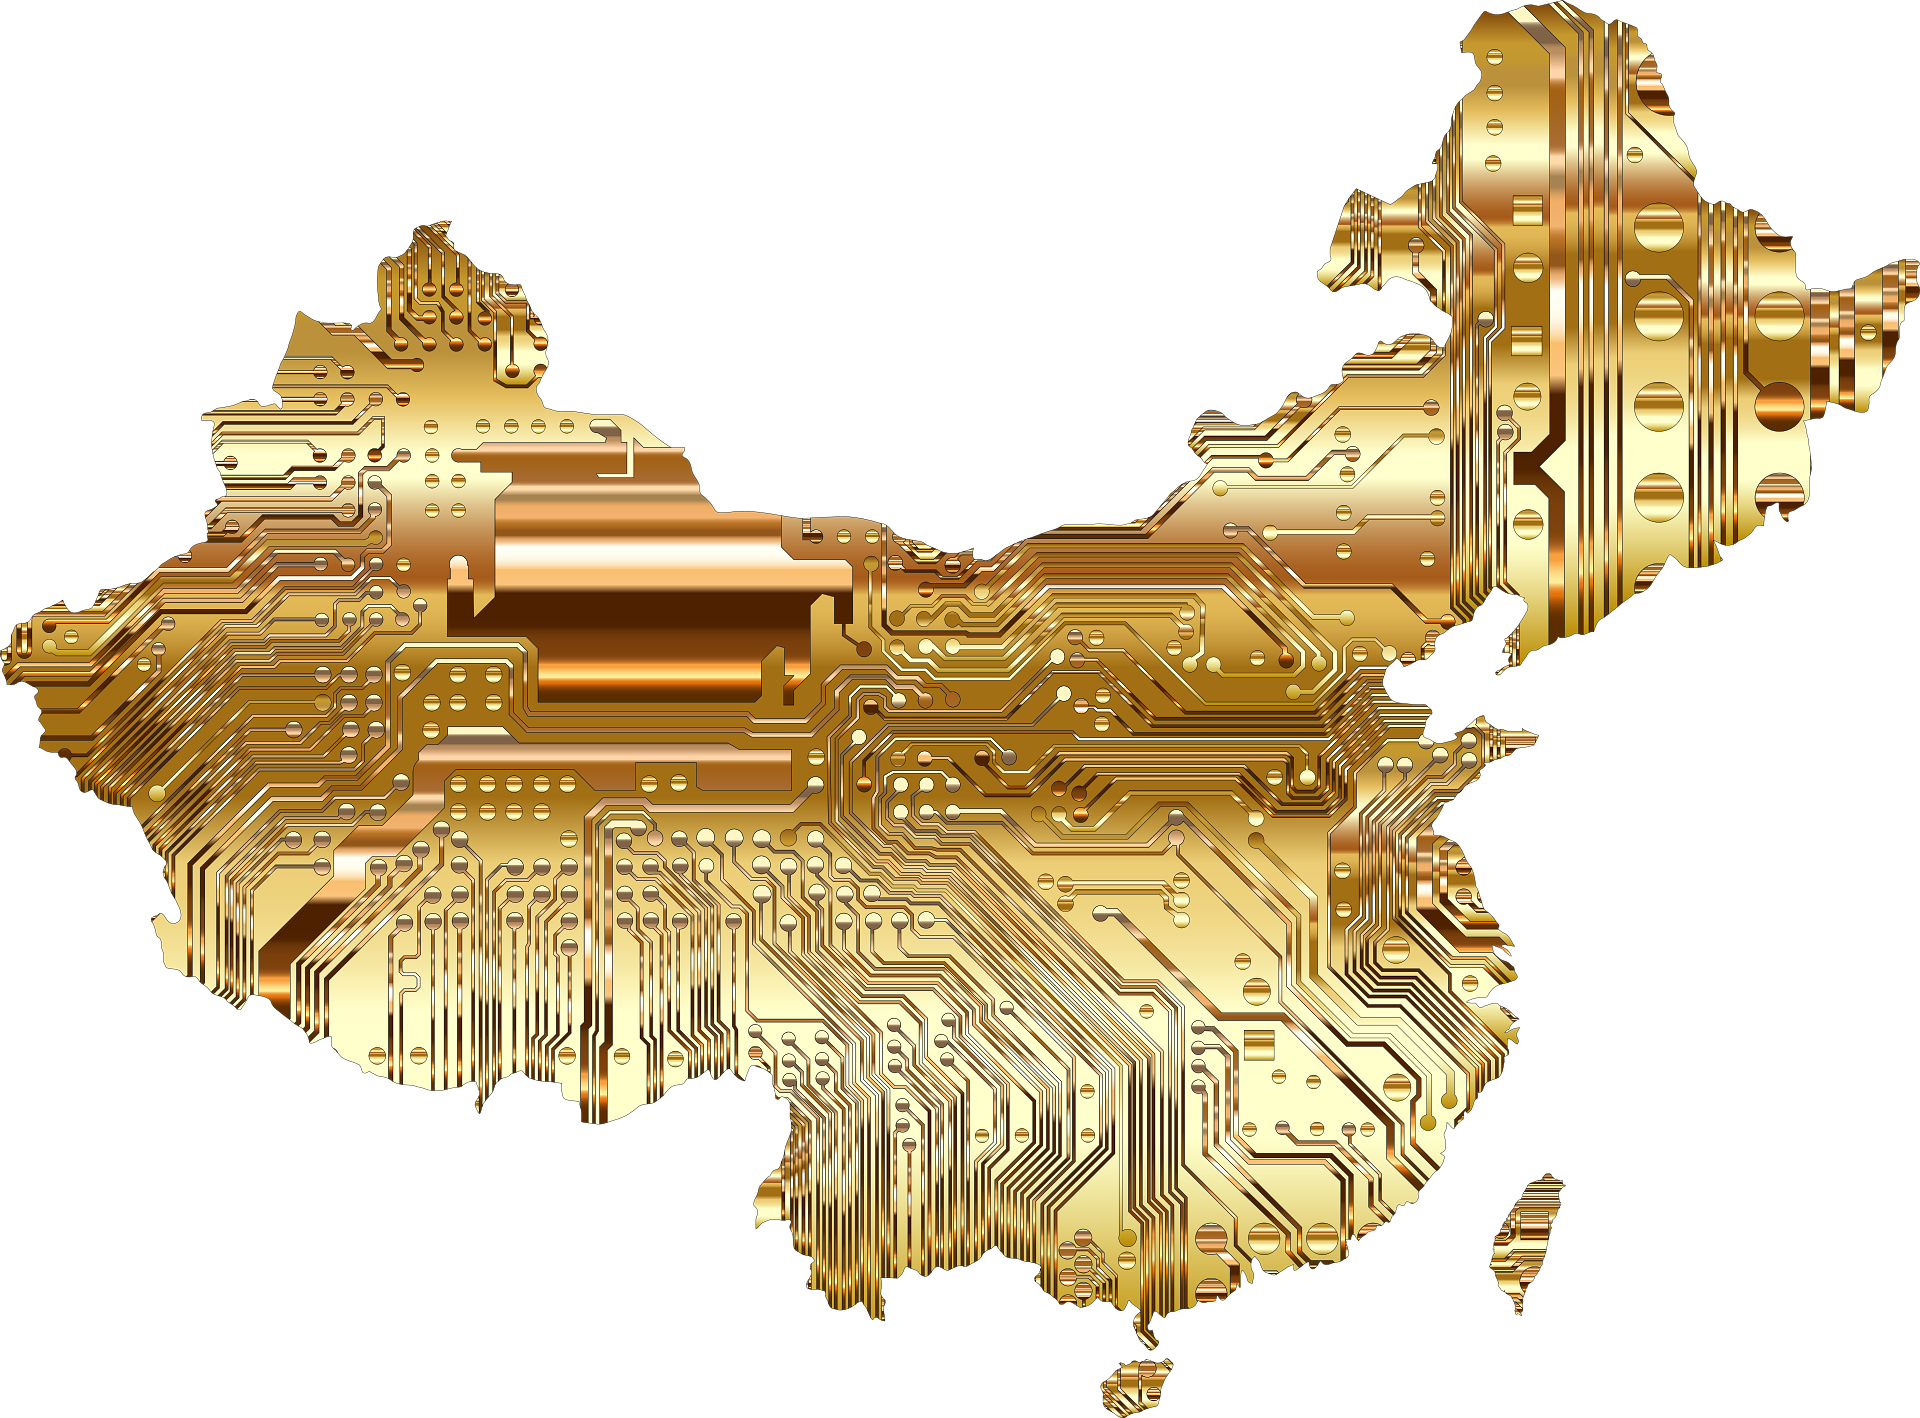 ROTA DA SEDA DIGITAL: China será ameaça ou alternativa para a internet?